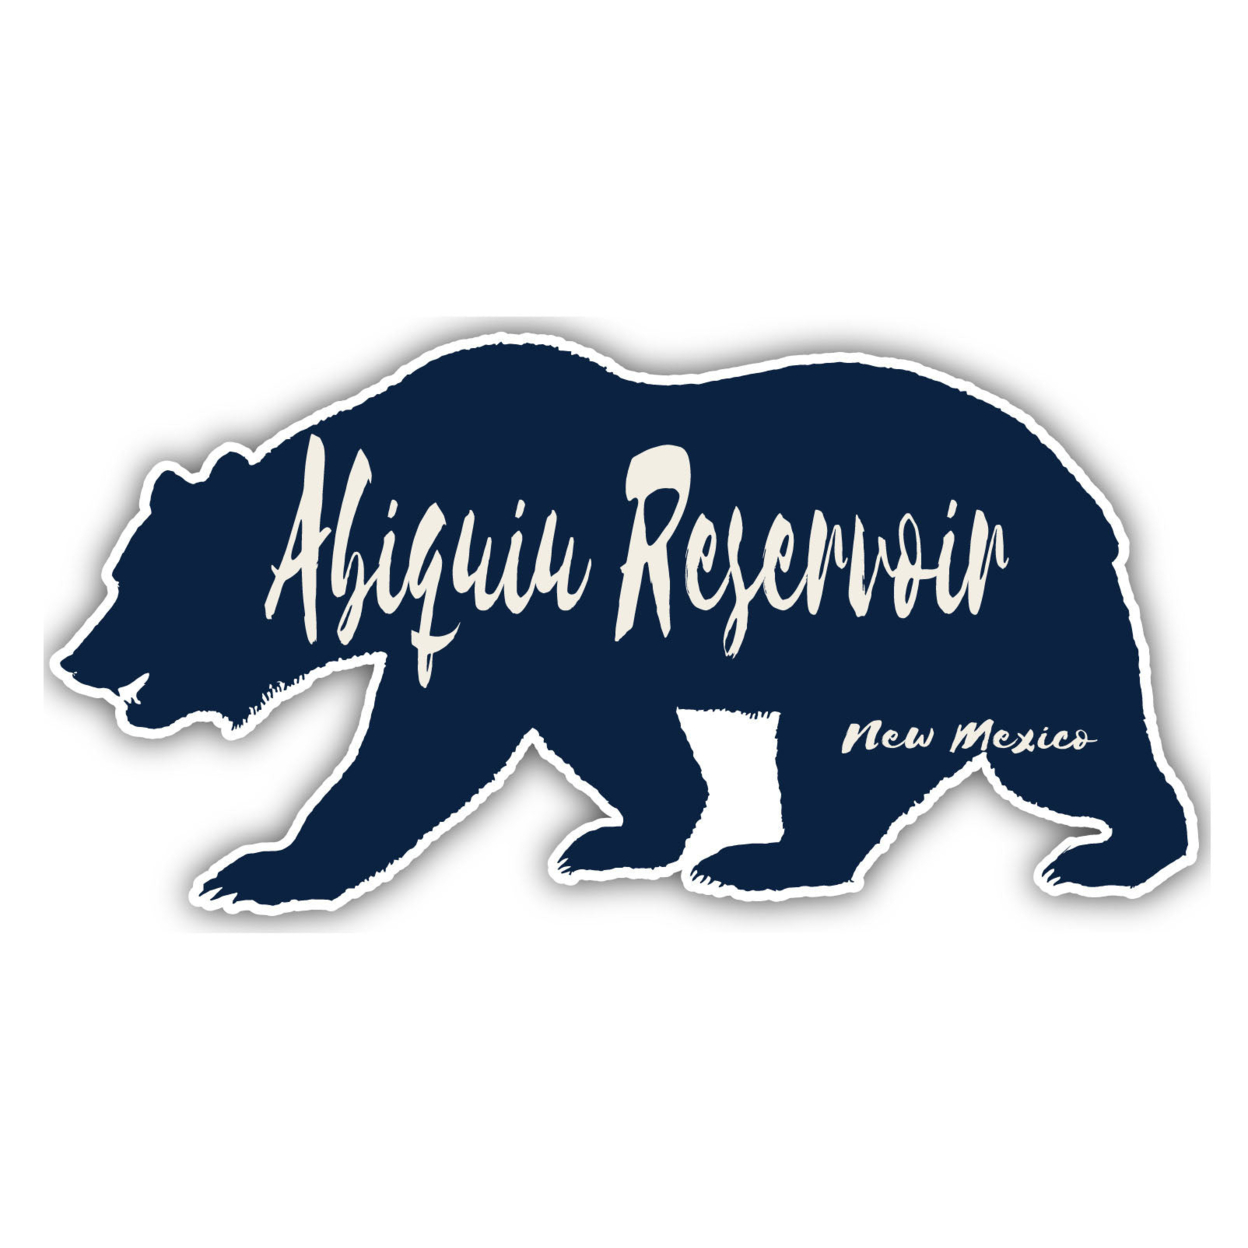 Abiquiu Reservoir New Mexico Souvenir Decorative Stickers (Choose Theme And Size) - 4-Pack, 12-Inch, Bear